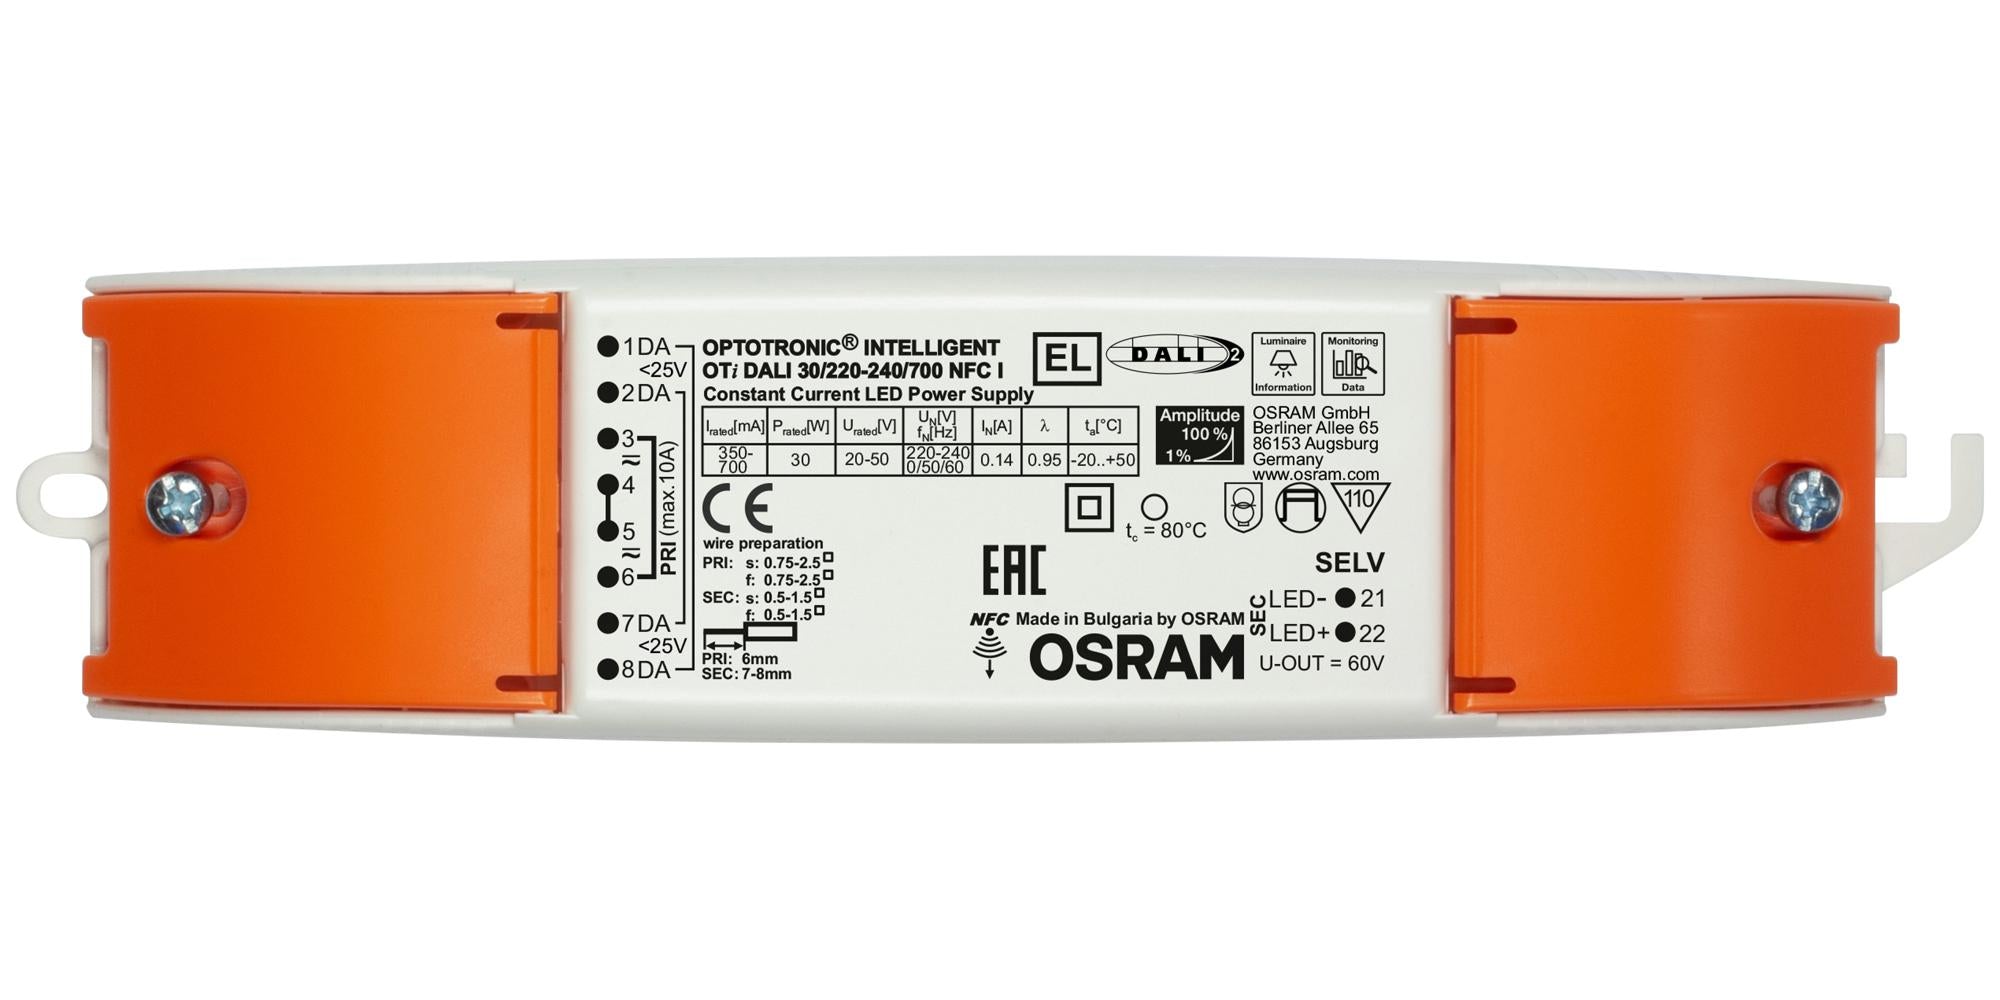 OTI-DALI-30/220-240/700-NFC-I LED DRIVER, CONSTANT CURRENT, 30W OSRAM